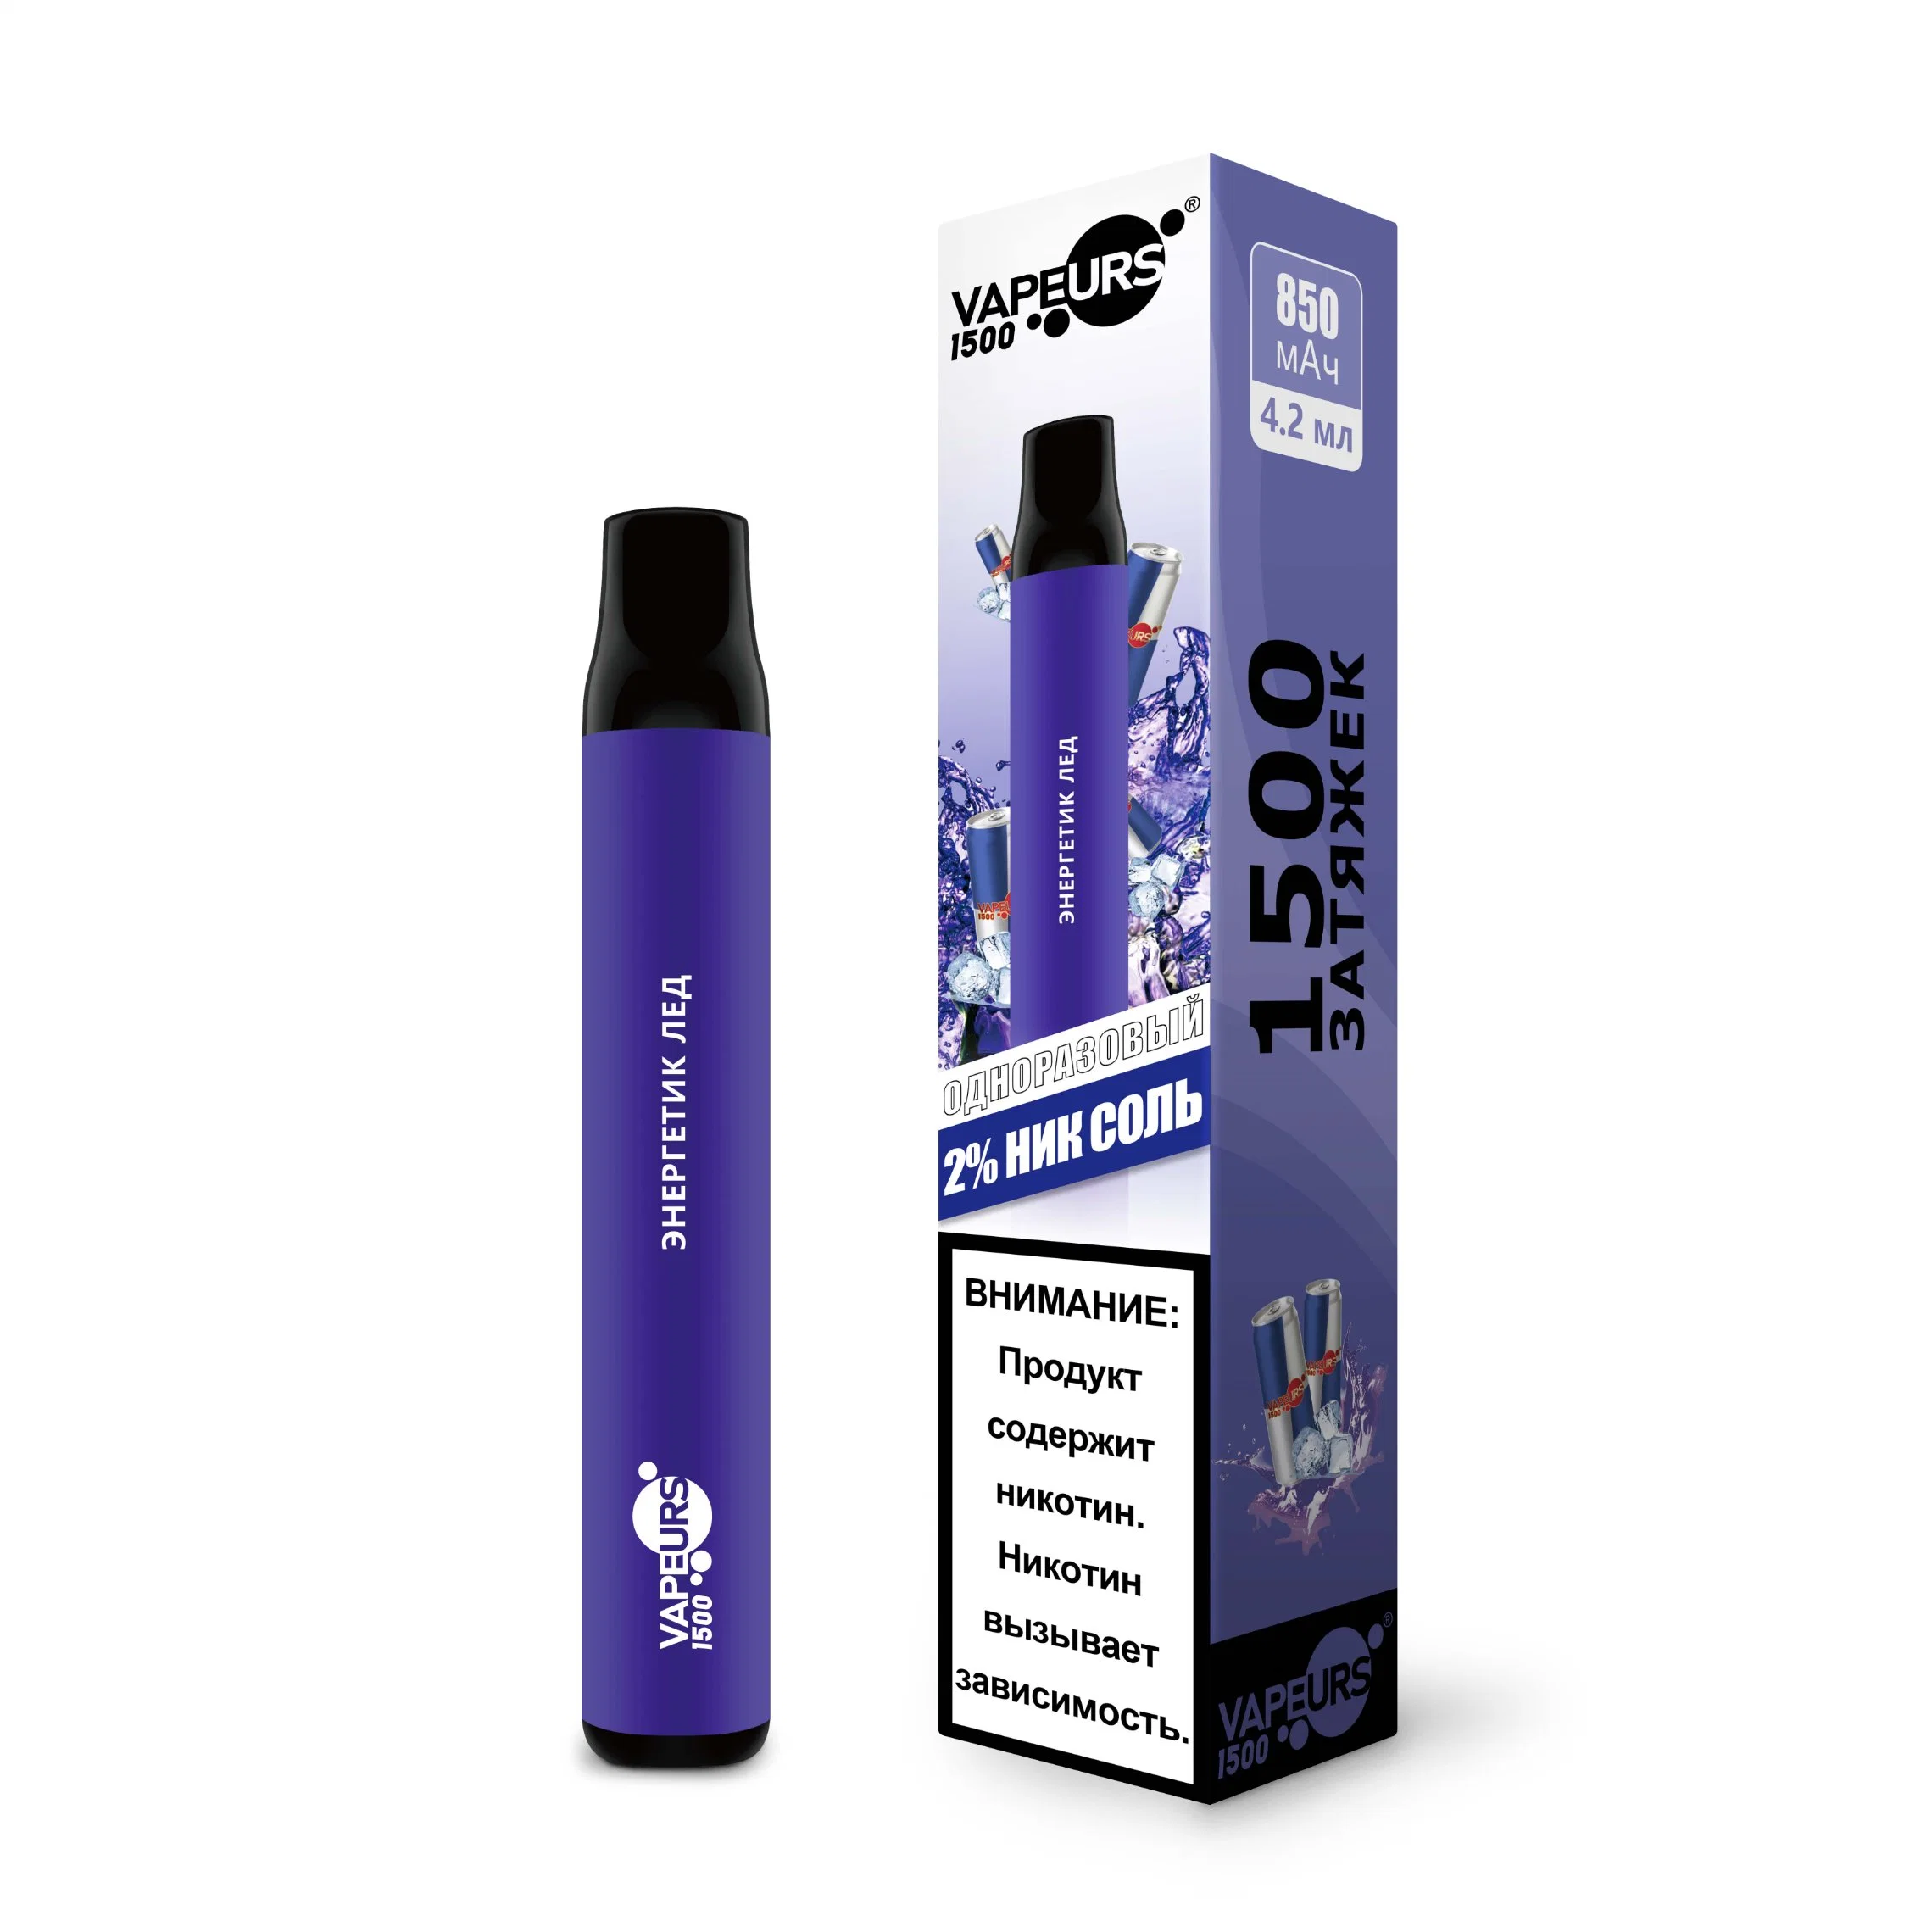 New Electronic Cigarette Electric Eshisha OEM ODM China Factory 500 800 1500 Puffs Vape Pen Elektro Portable Hookah Price